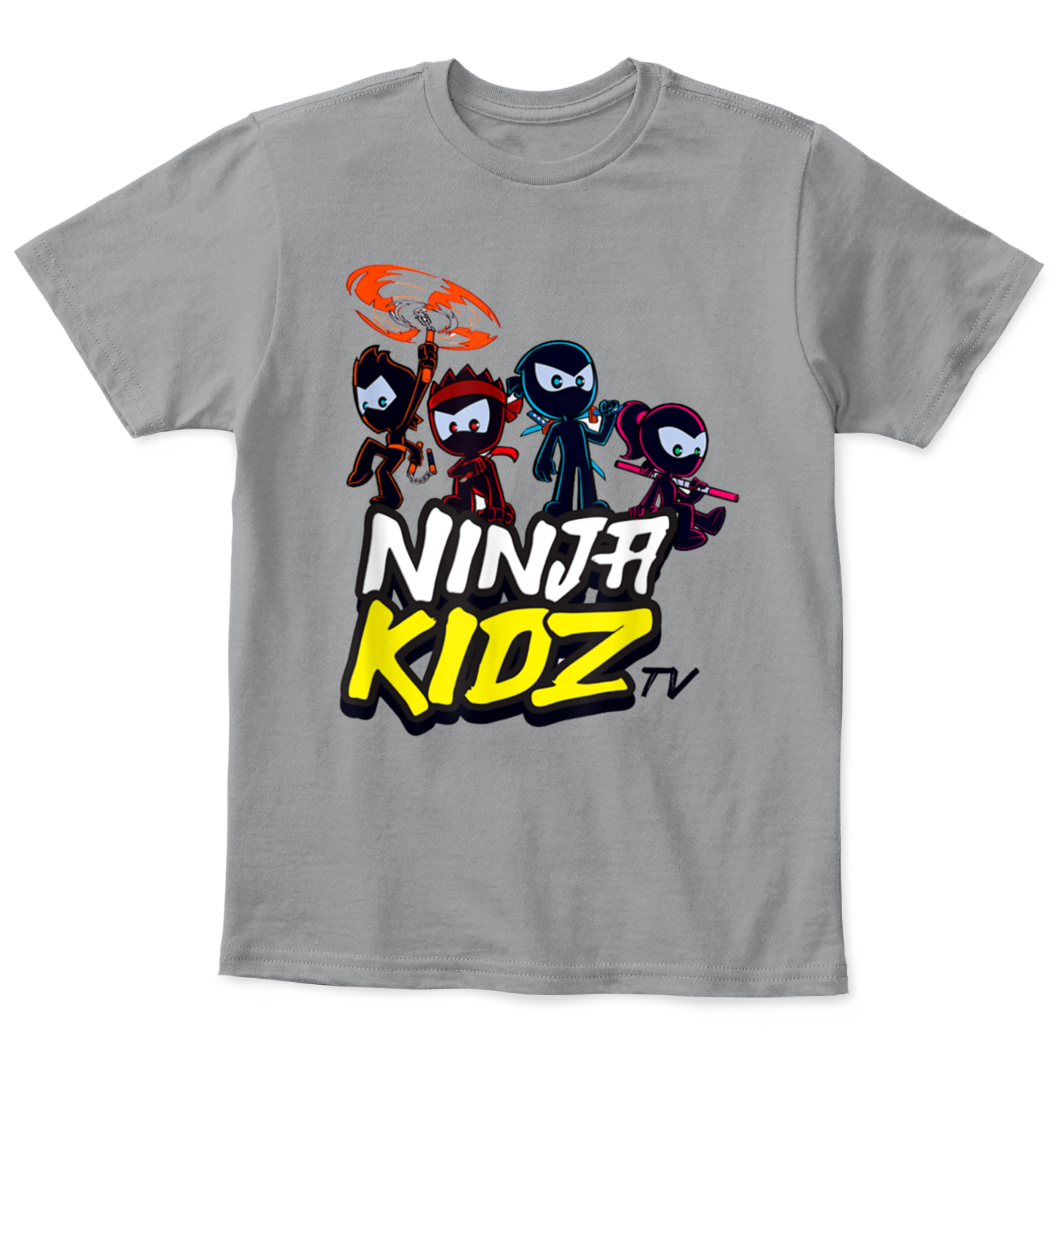 Ninja Warrior For Kidz TV T-Shirt - Ellie Shirt